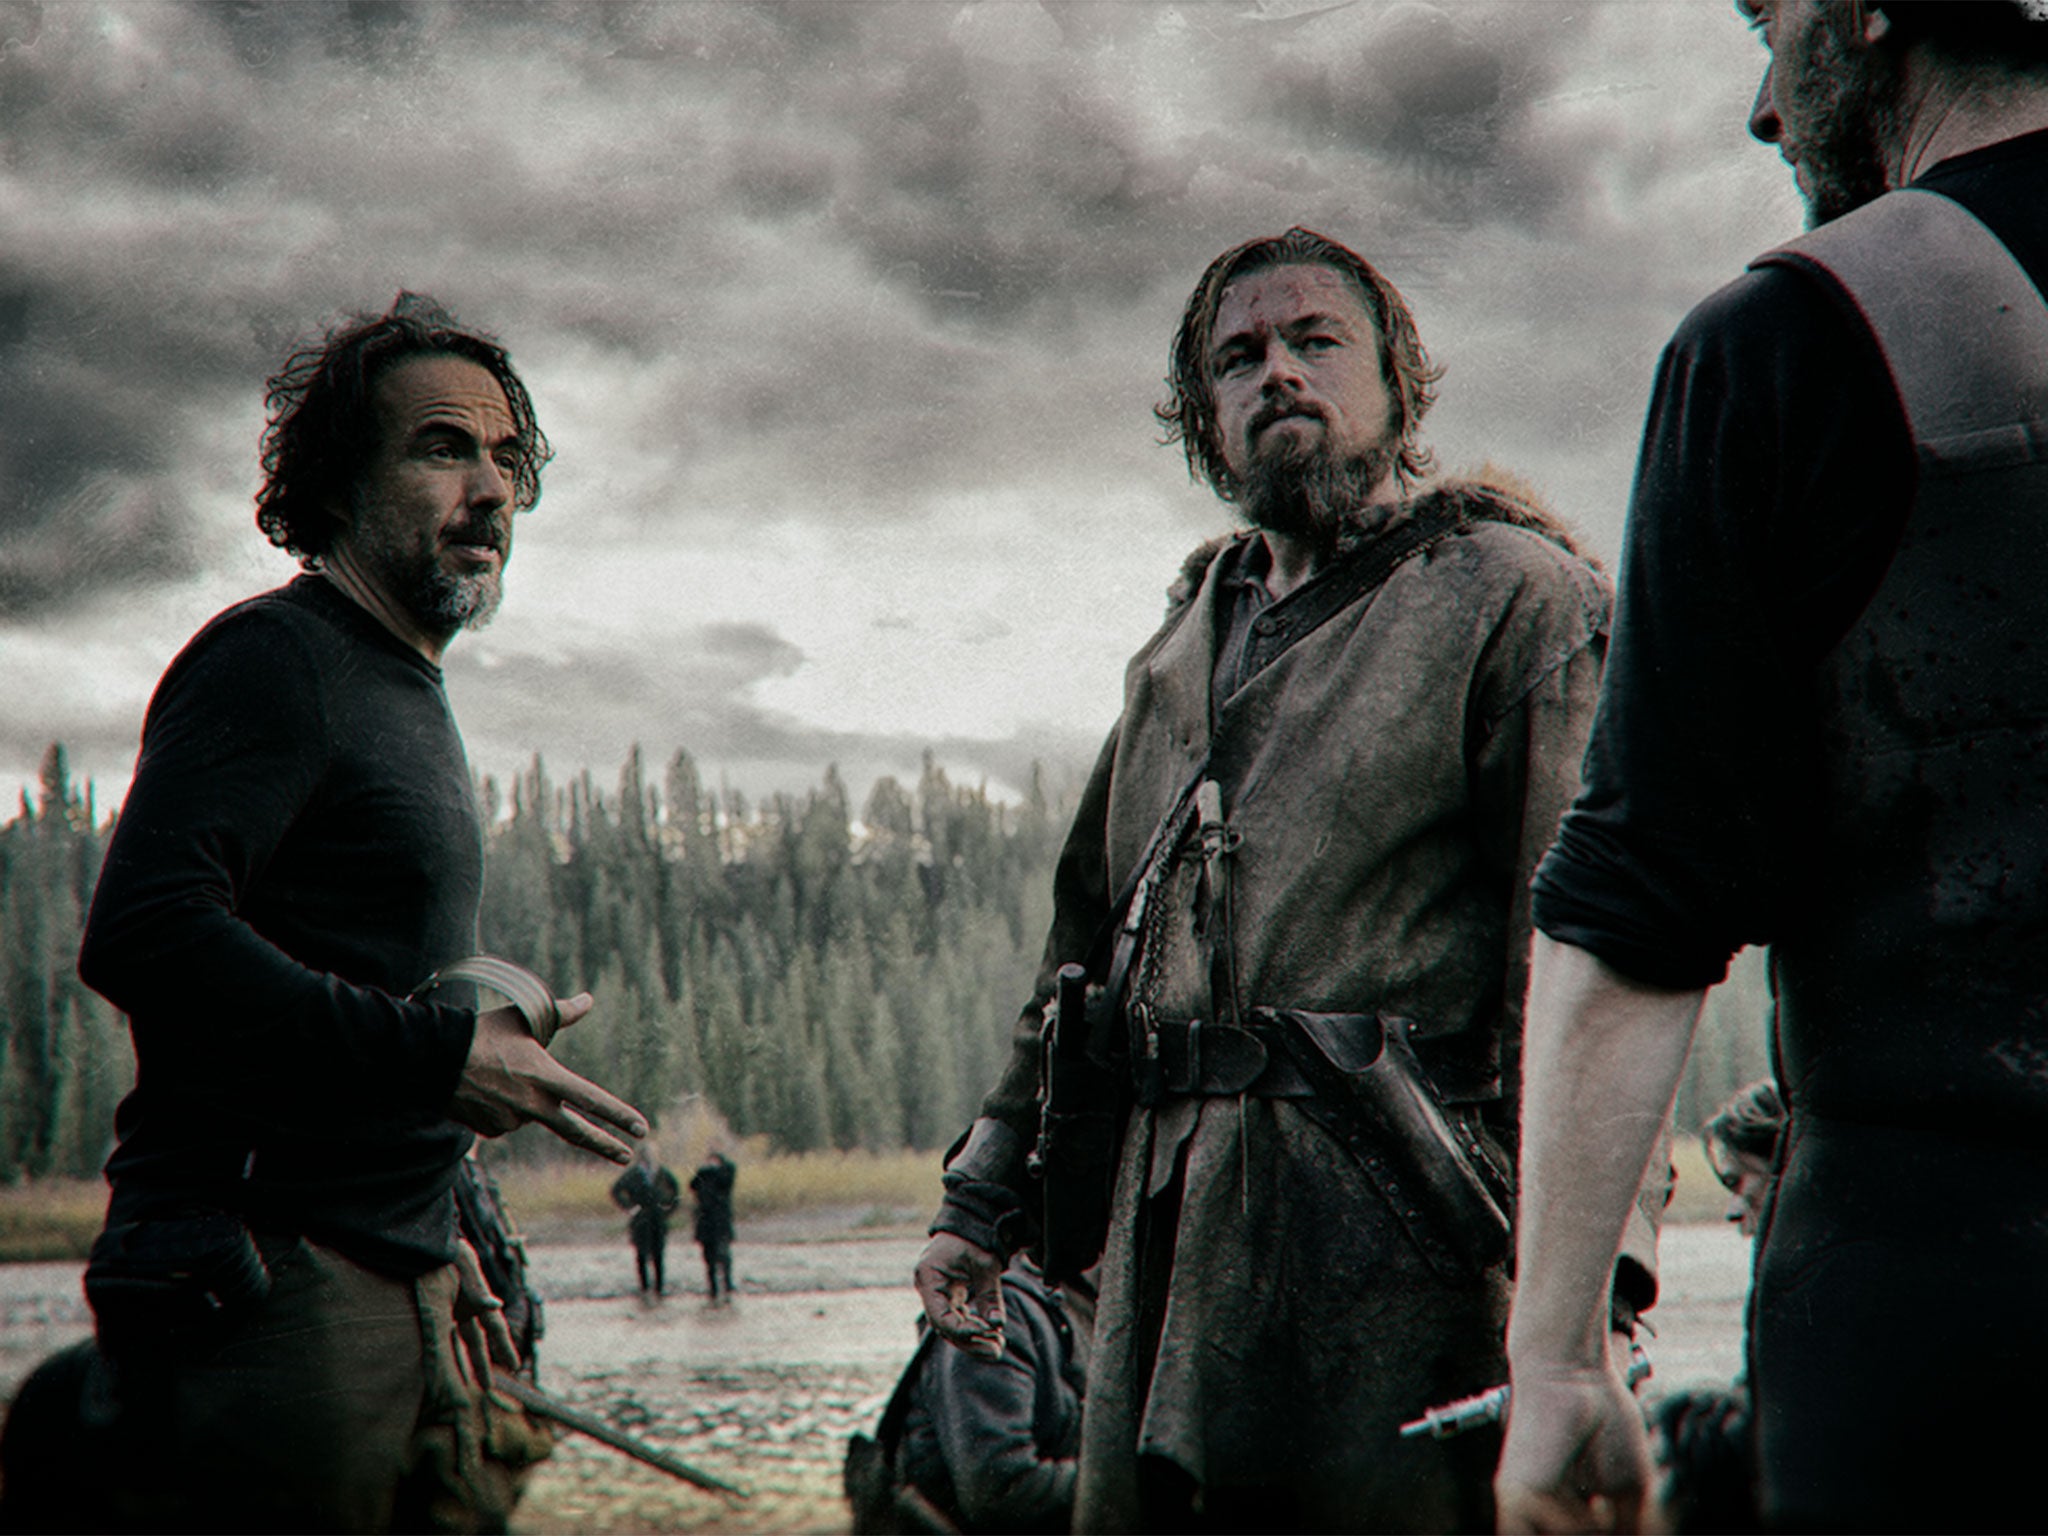 Leonardo DiCaprio filming The Revenant with Alejandro Gonzalez Inarritu